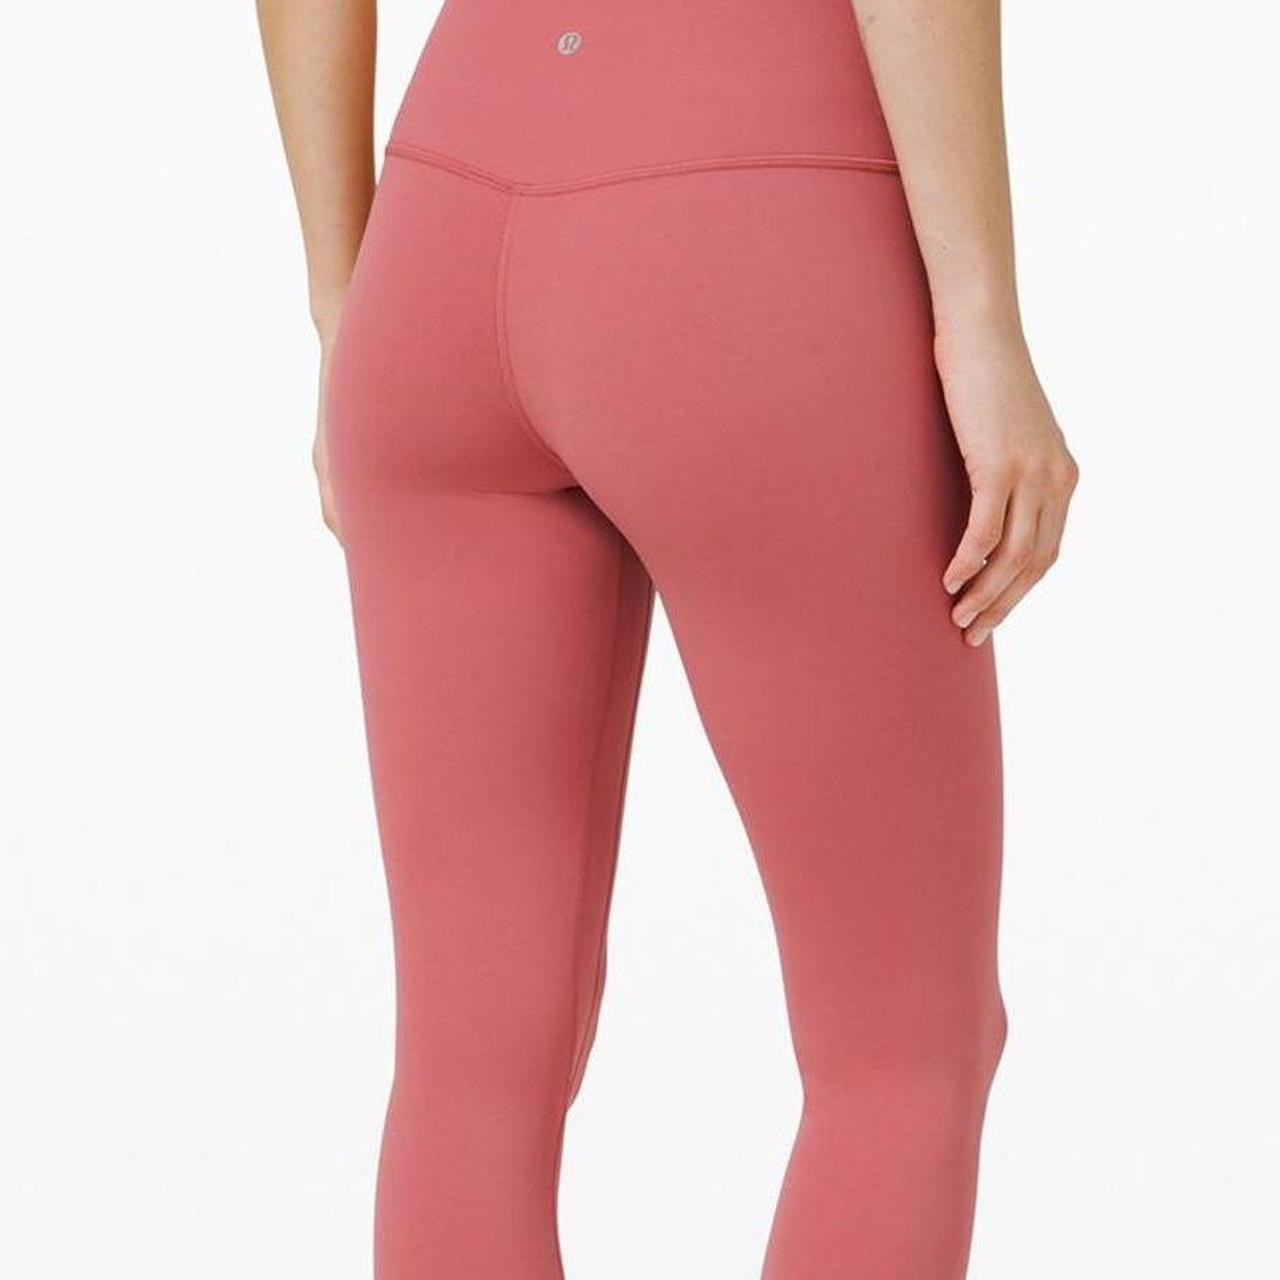 Lululemon Align pant cropped leggings Salmon pink